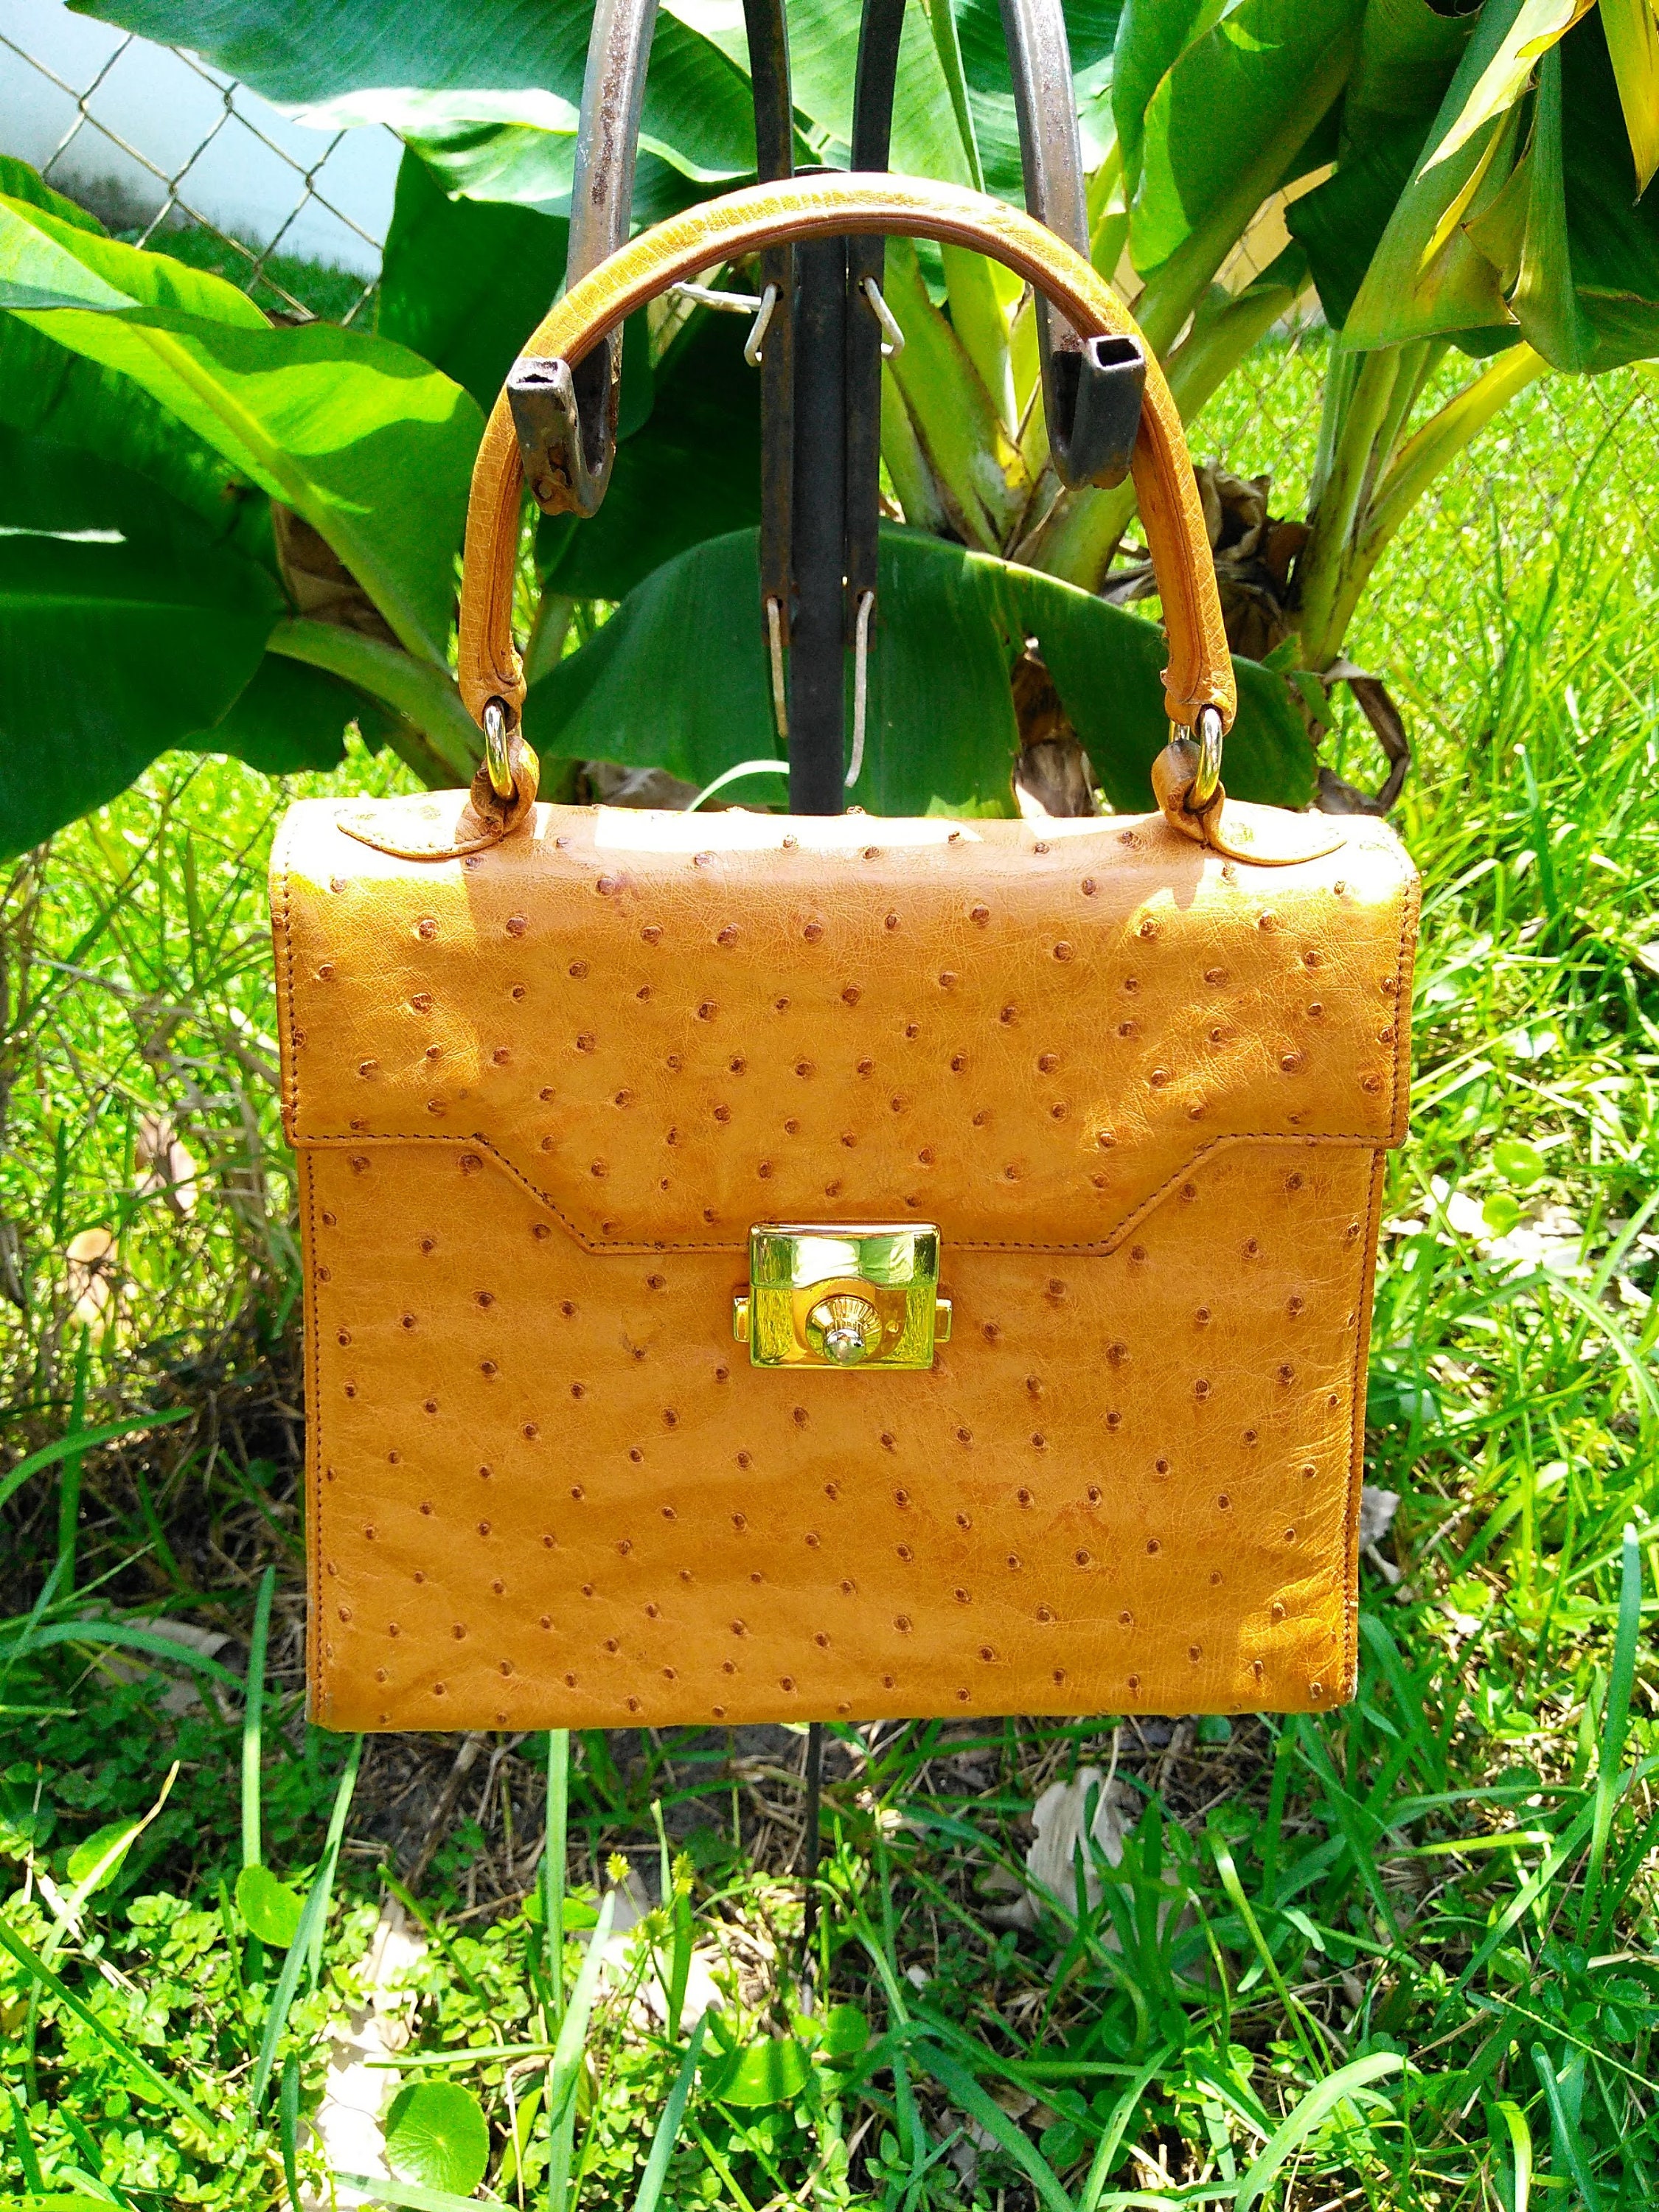 Genuine Ostrich Leather Handbag from Japan